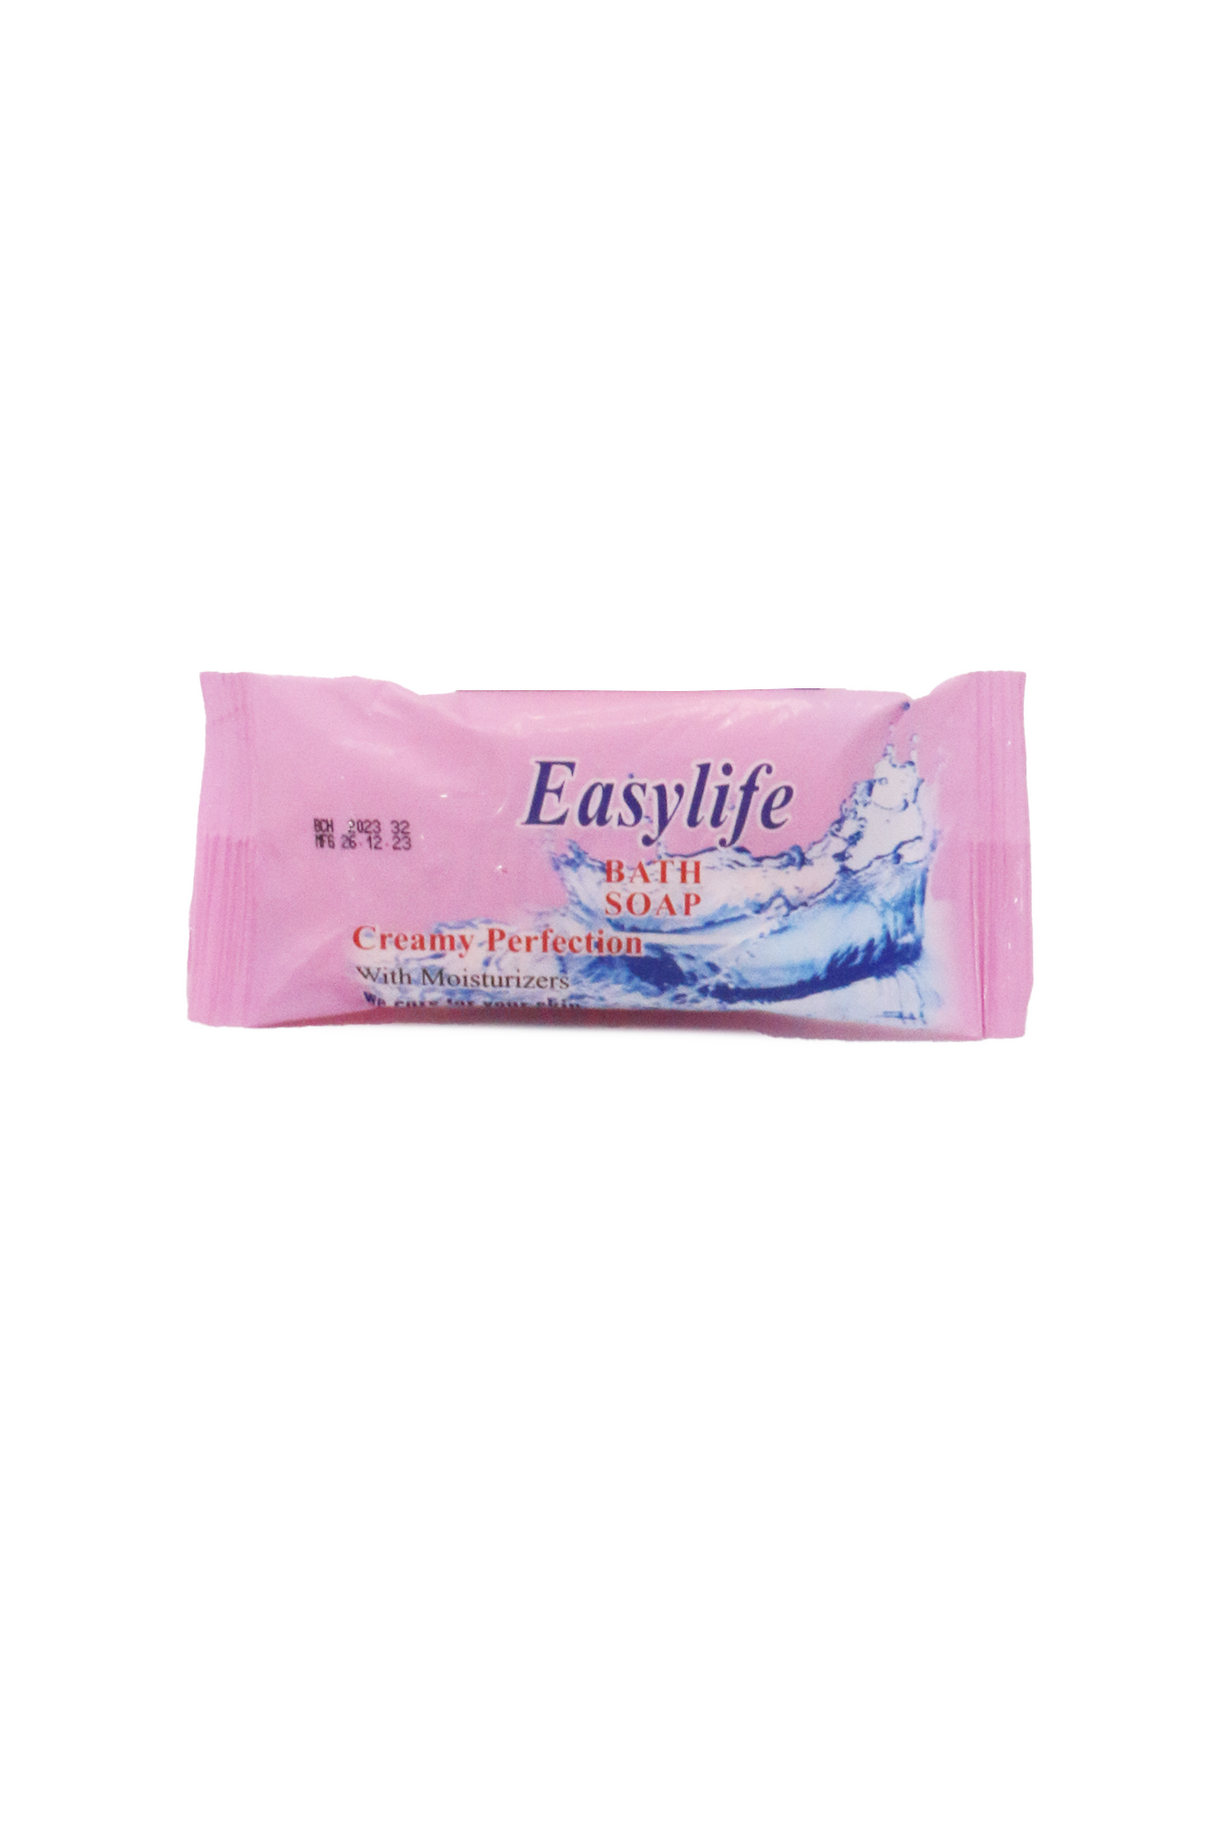 easylife bath soap creamy p pink 120g